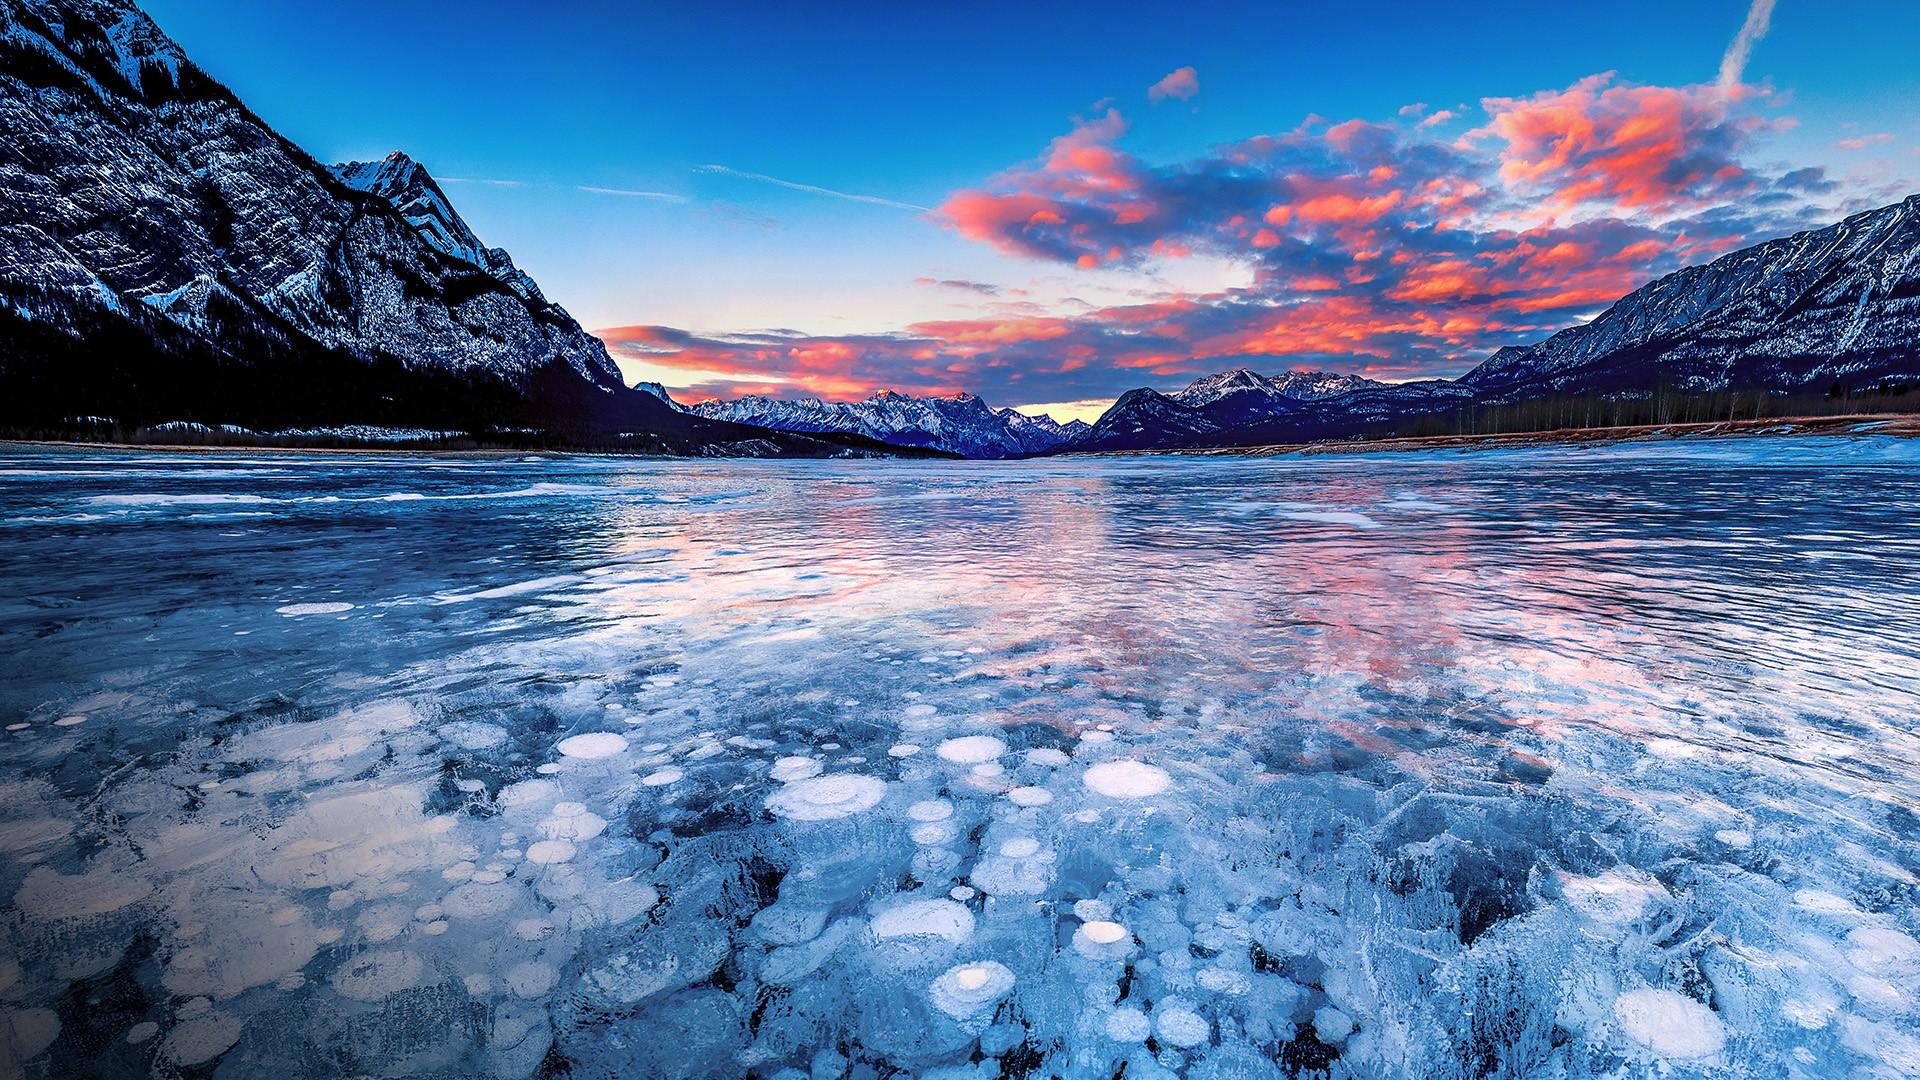 Methane bubbles under ice, sunset at Abraham Lake, Alberta, Canada